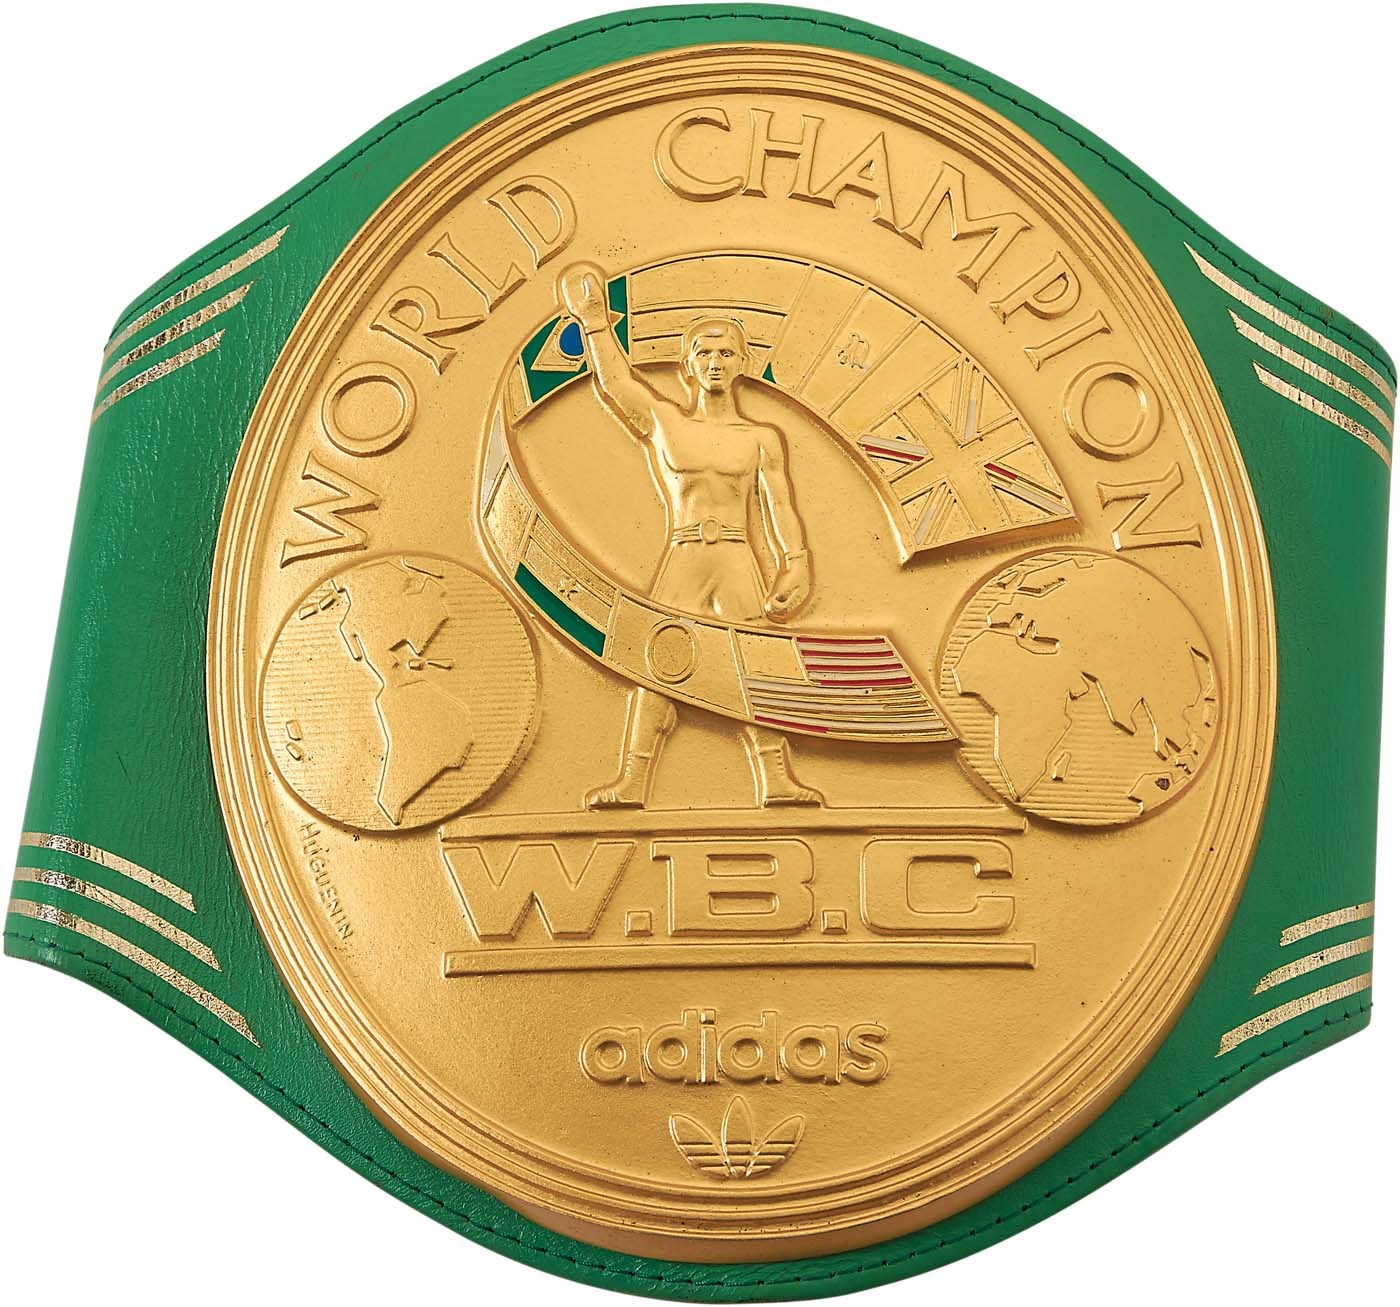 Muhammad Ali's "Rumble in the Jungle" WBC Championship Belt